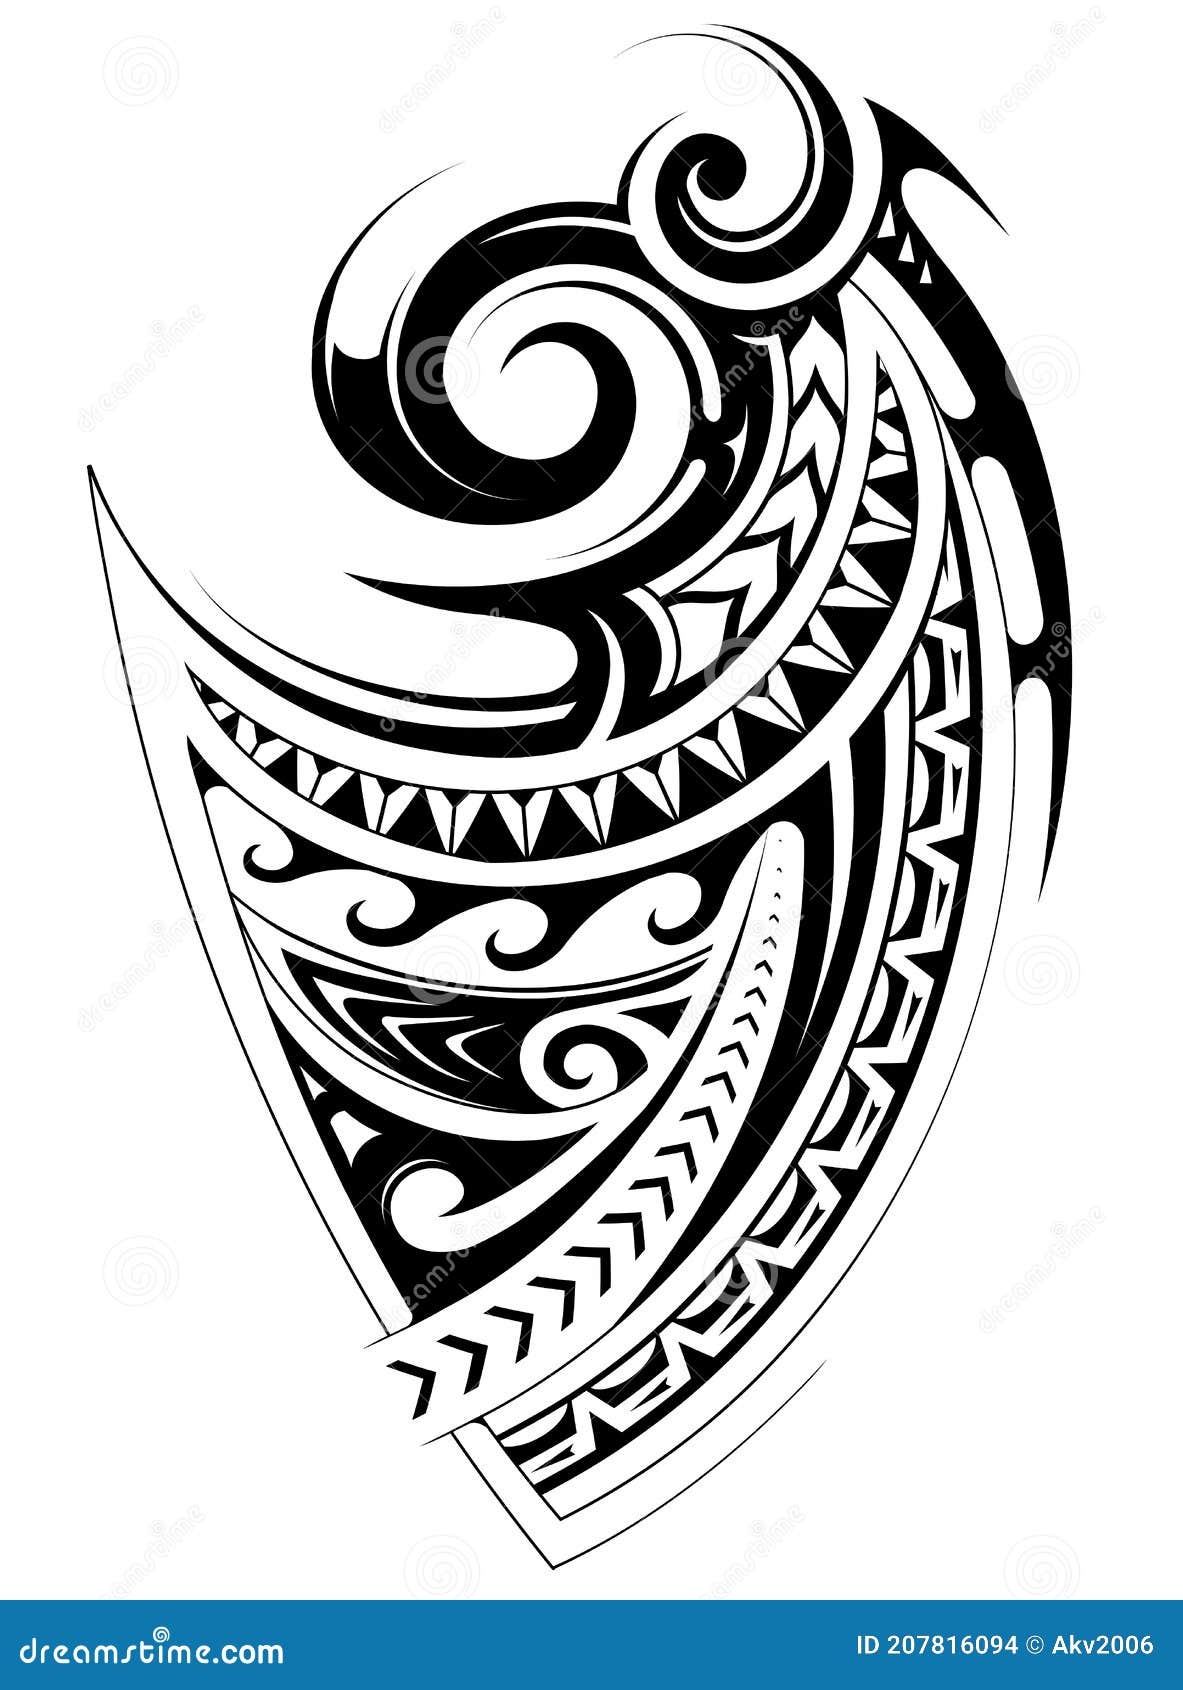 Flower koru maori tattoo tribal design - Inspire Uplift